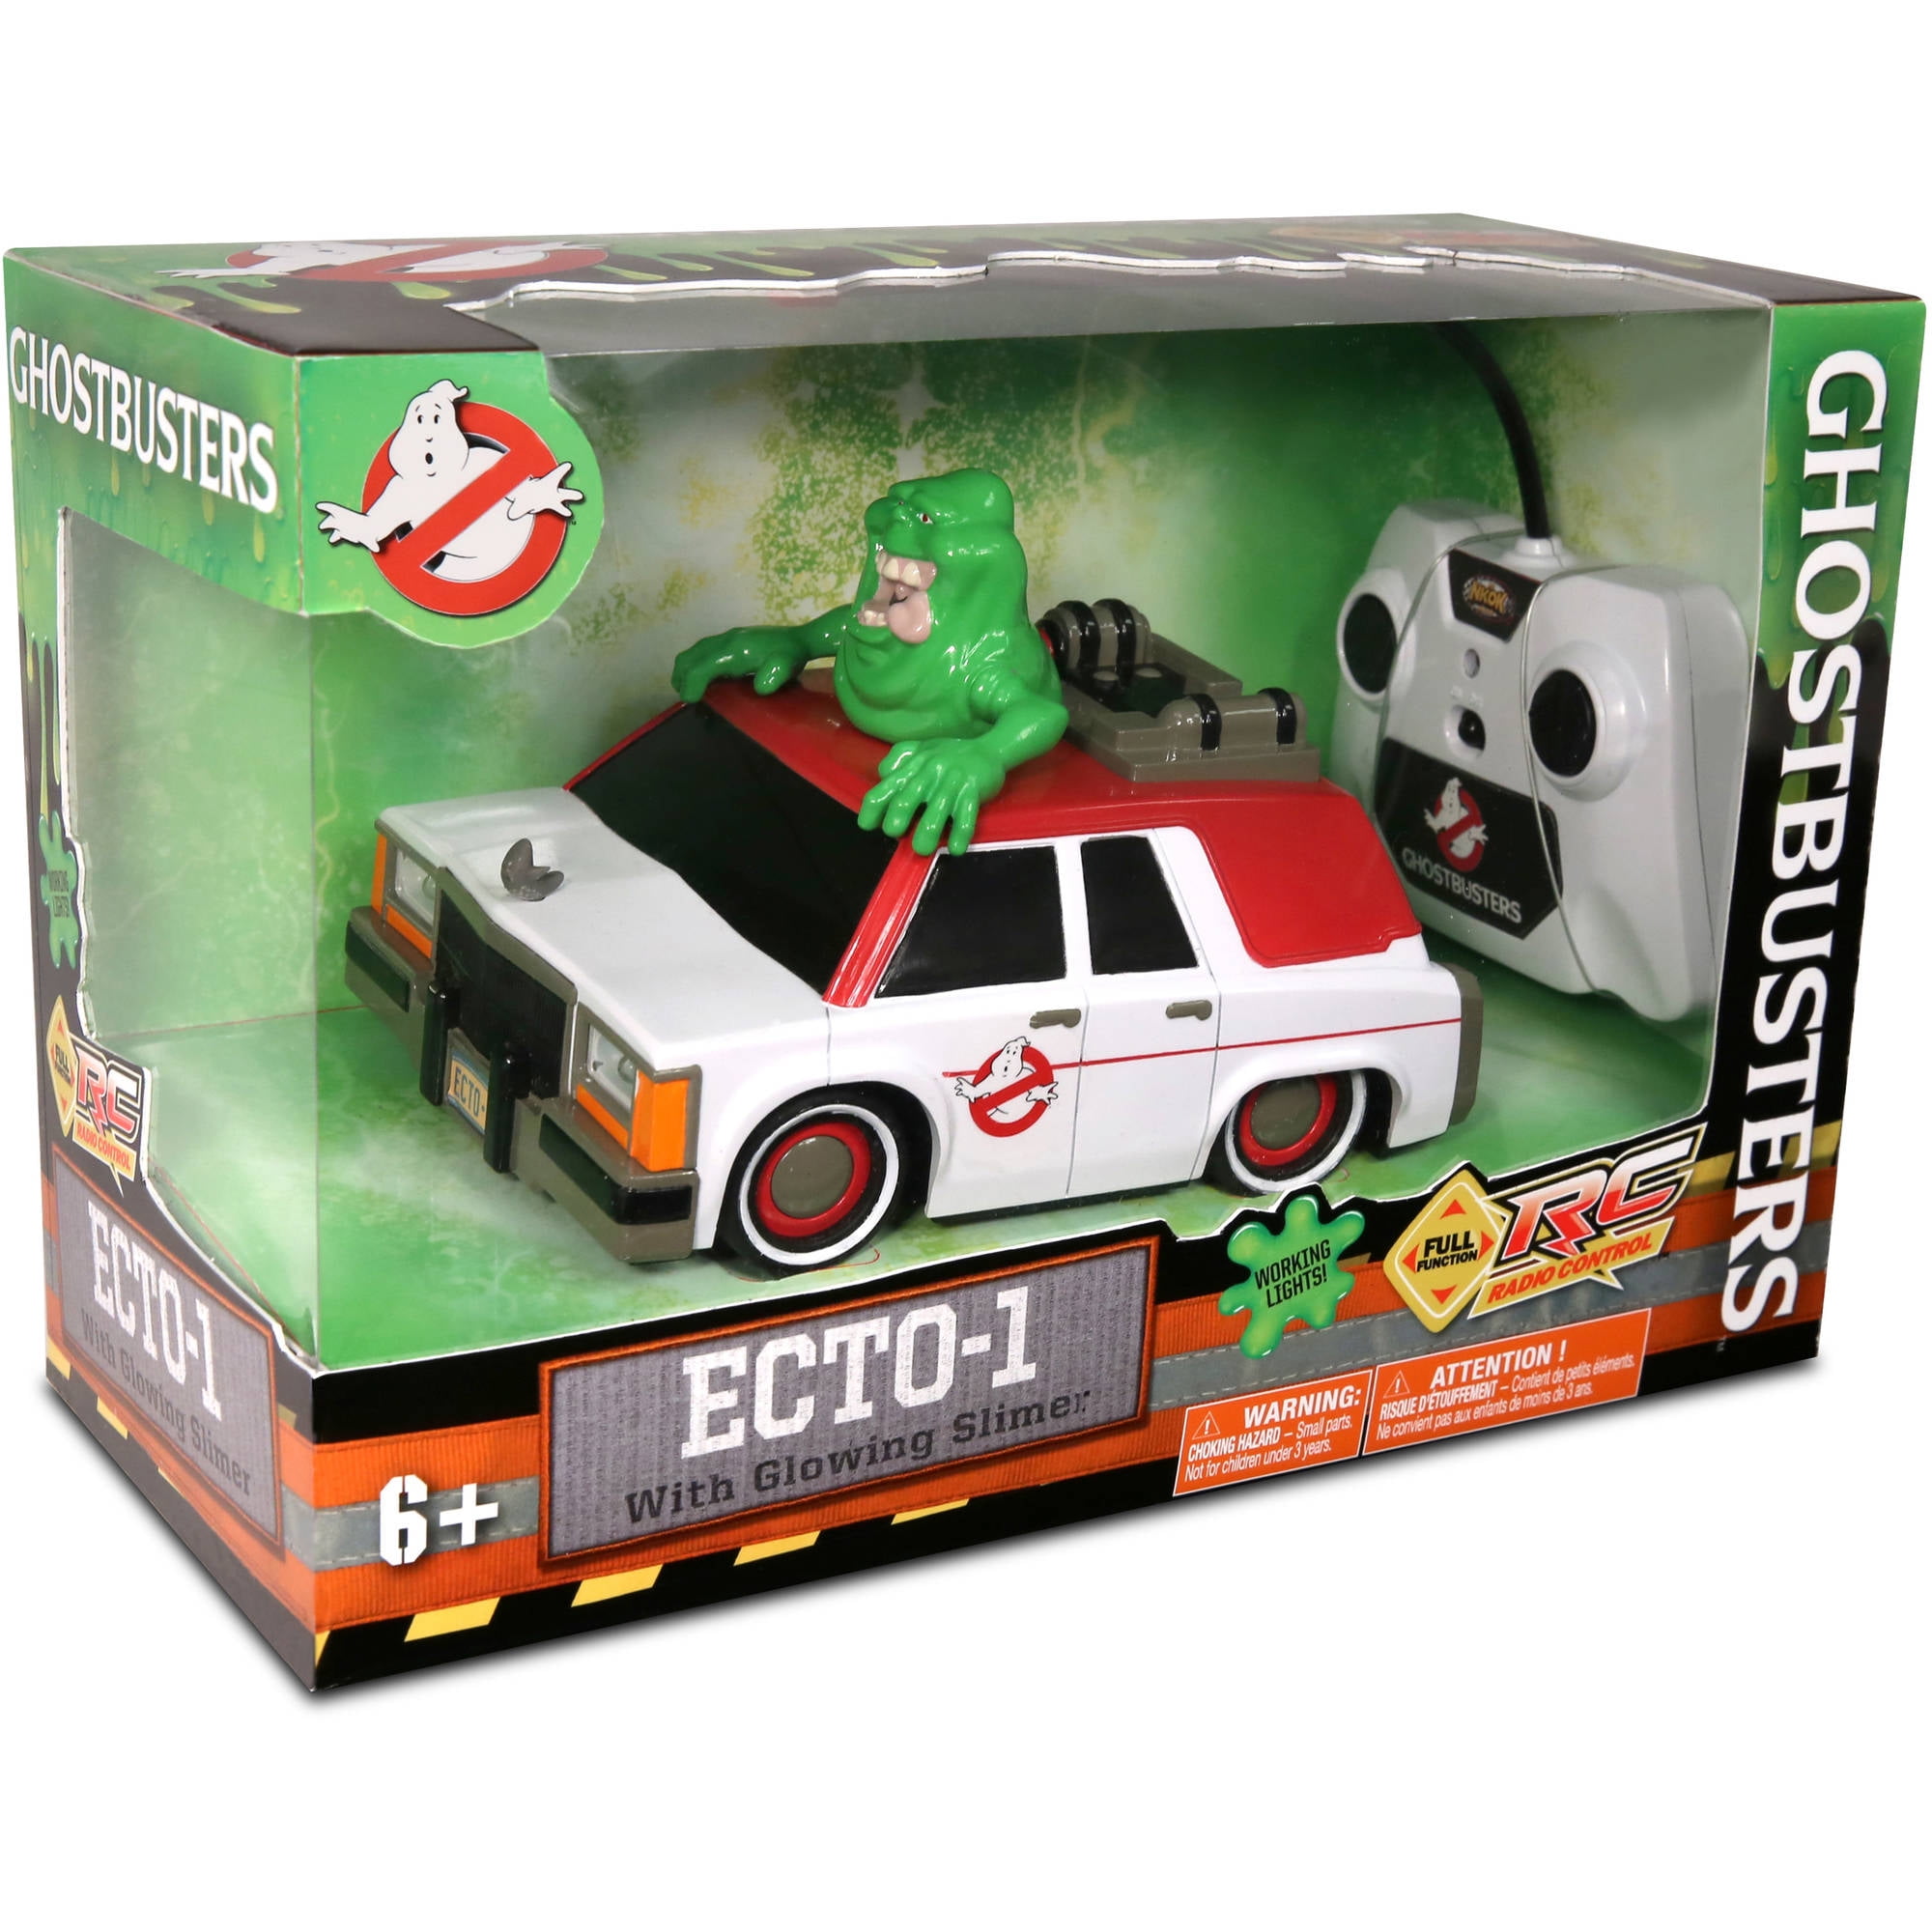 Ghostbusters™ Ferngesteuert RC ECTO-1™ Fahrzeug Mit Leuchtende Slimer NKOK